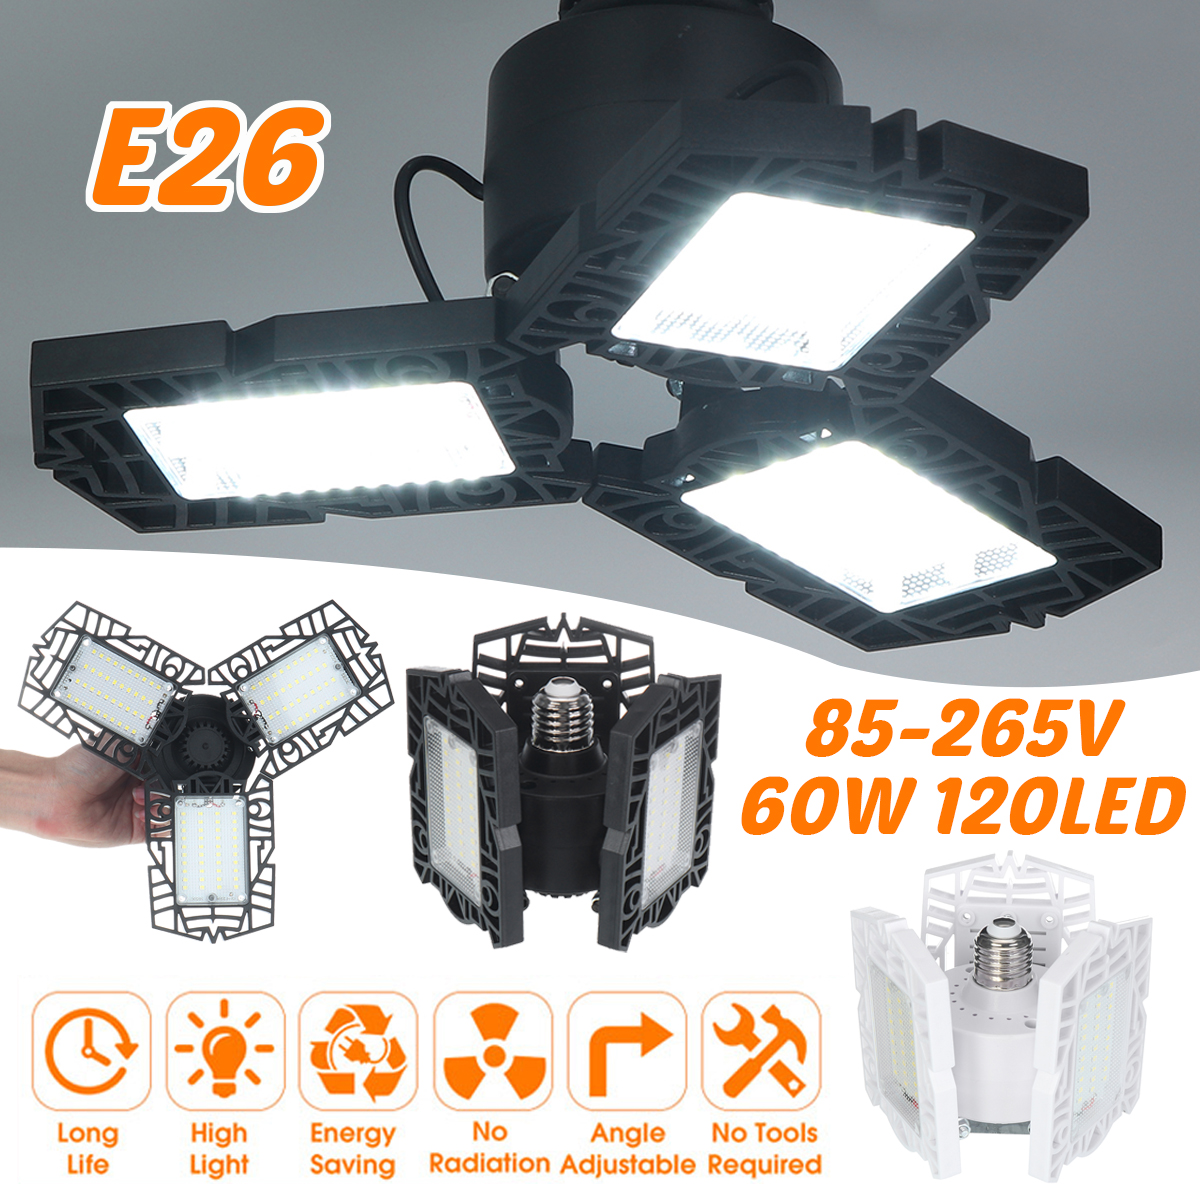 E26-60W-120LED-Garage-Light-Bulb-Foldable-Fan-Industrial-Workshop-Ceiling-Lamp-85-265V-1719860-1